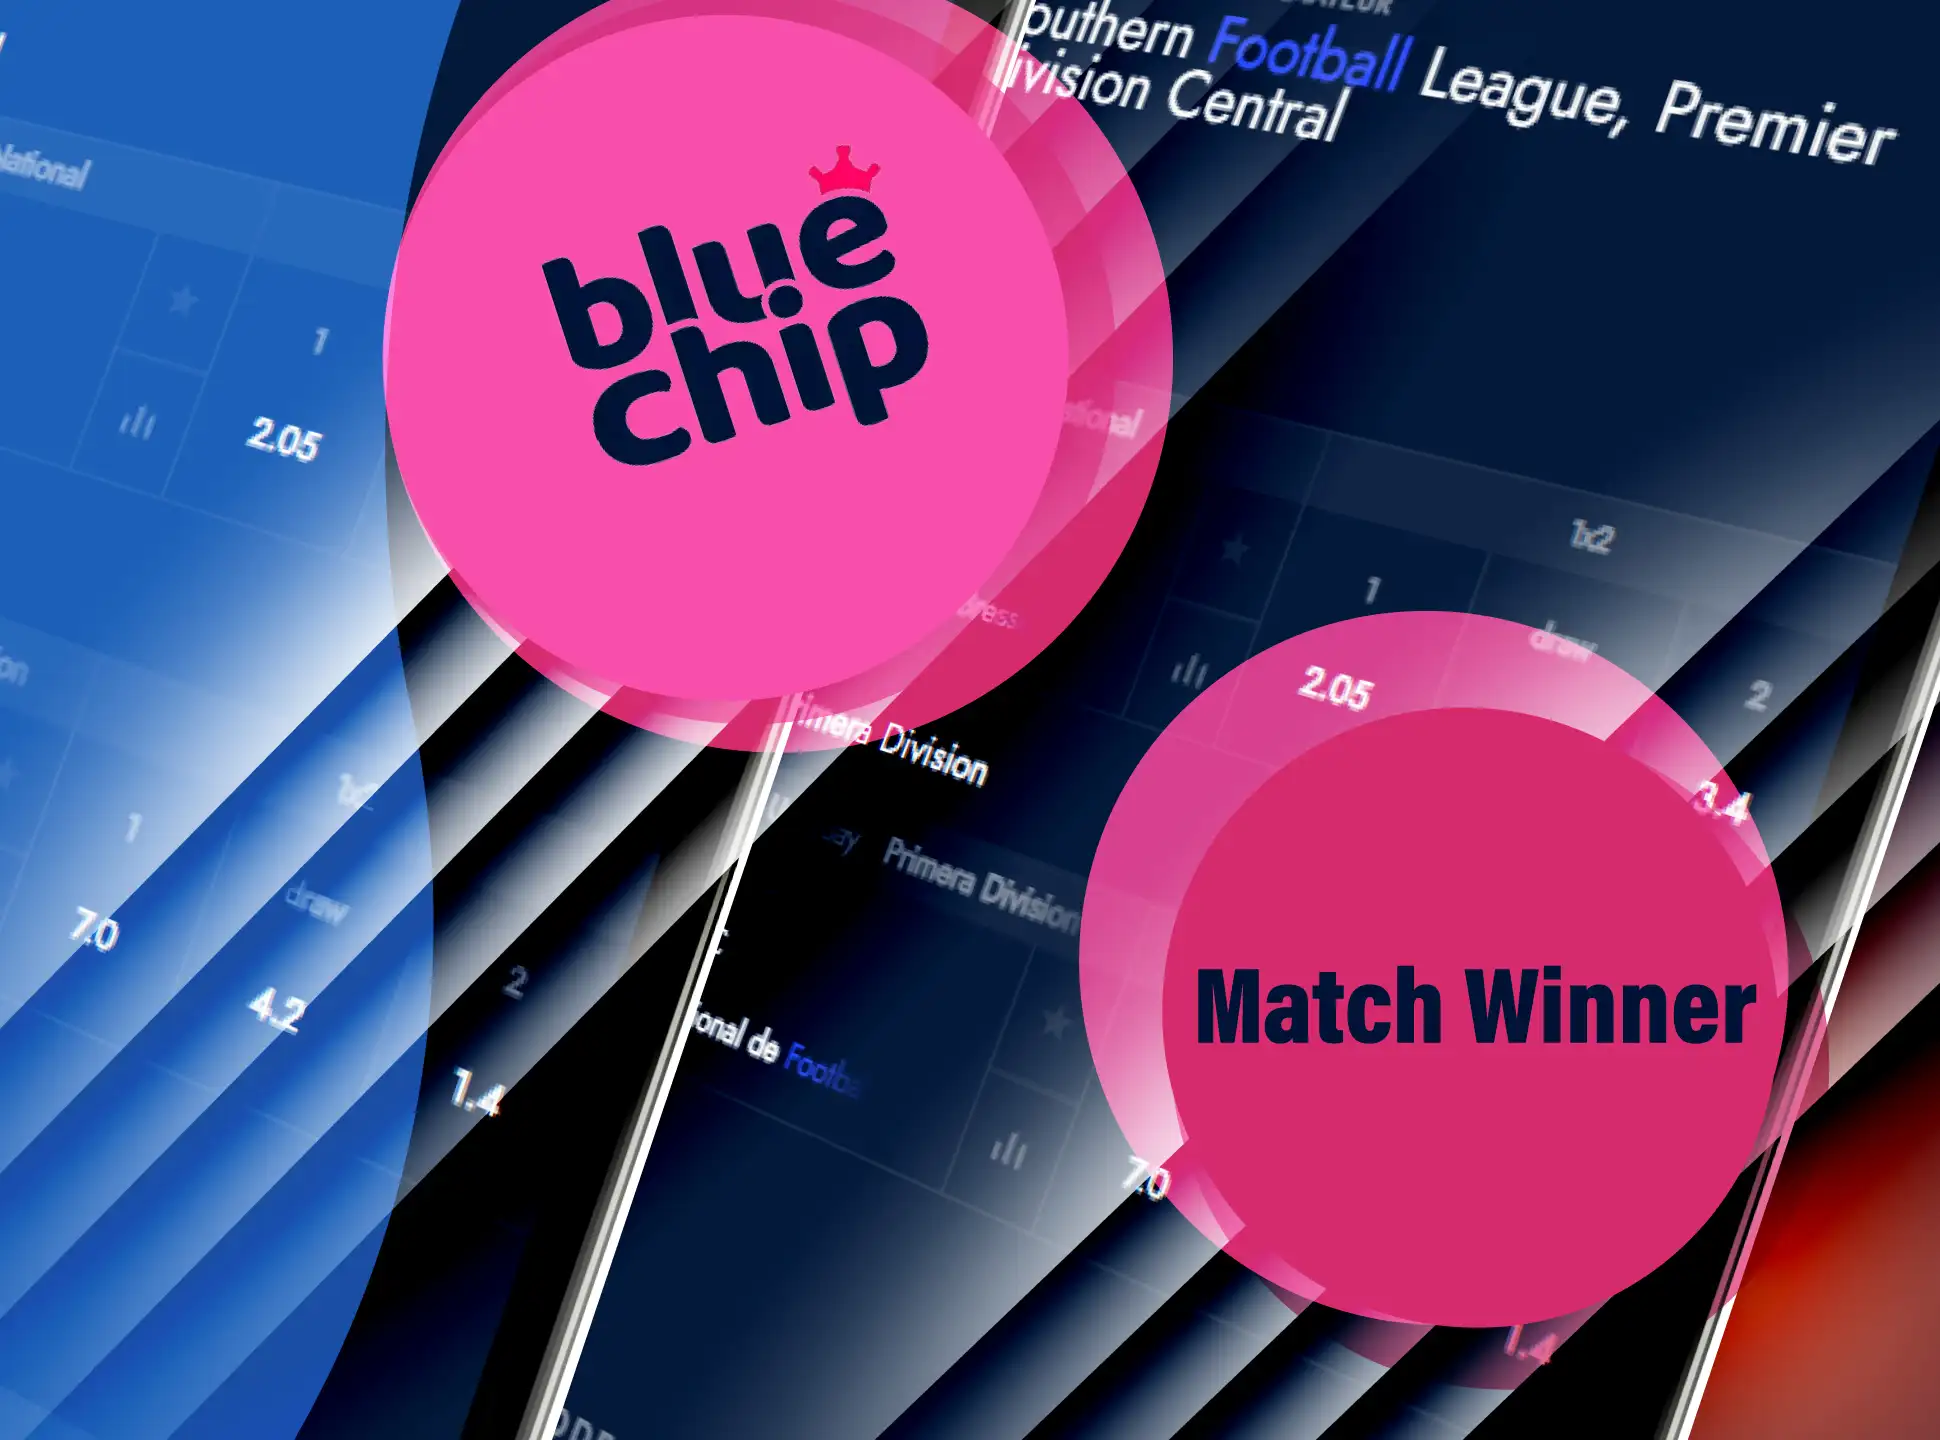 Bet on the match winner at Bluechip.